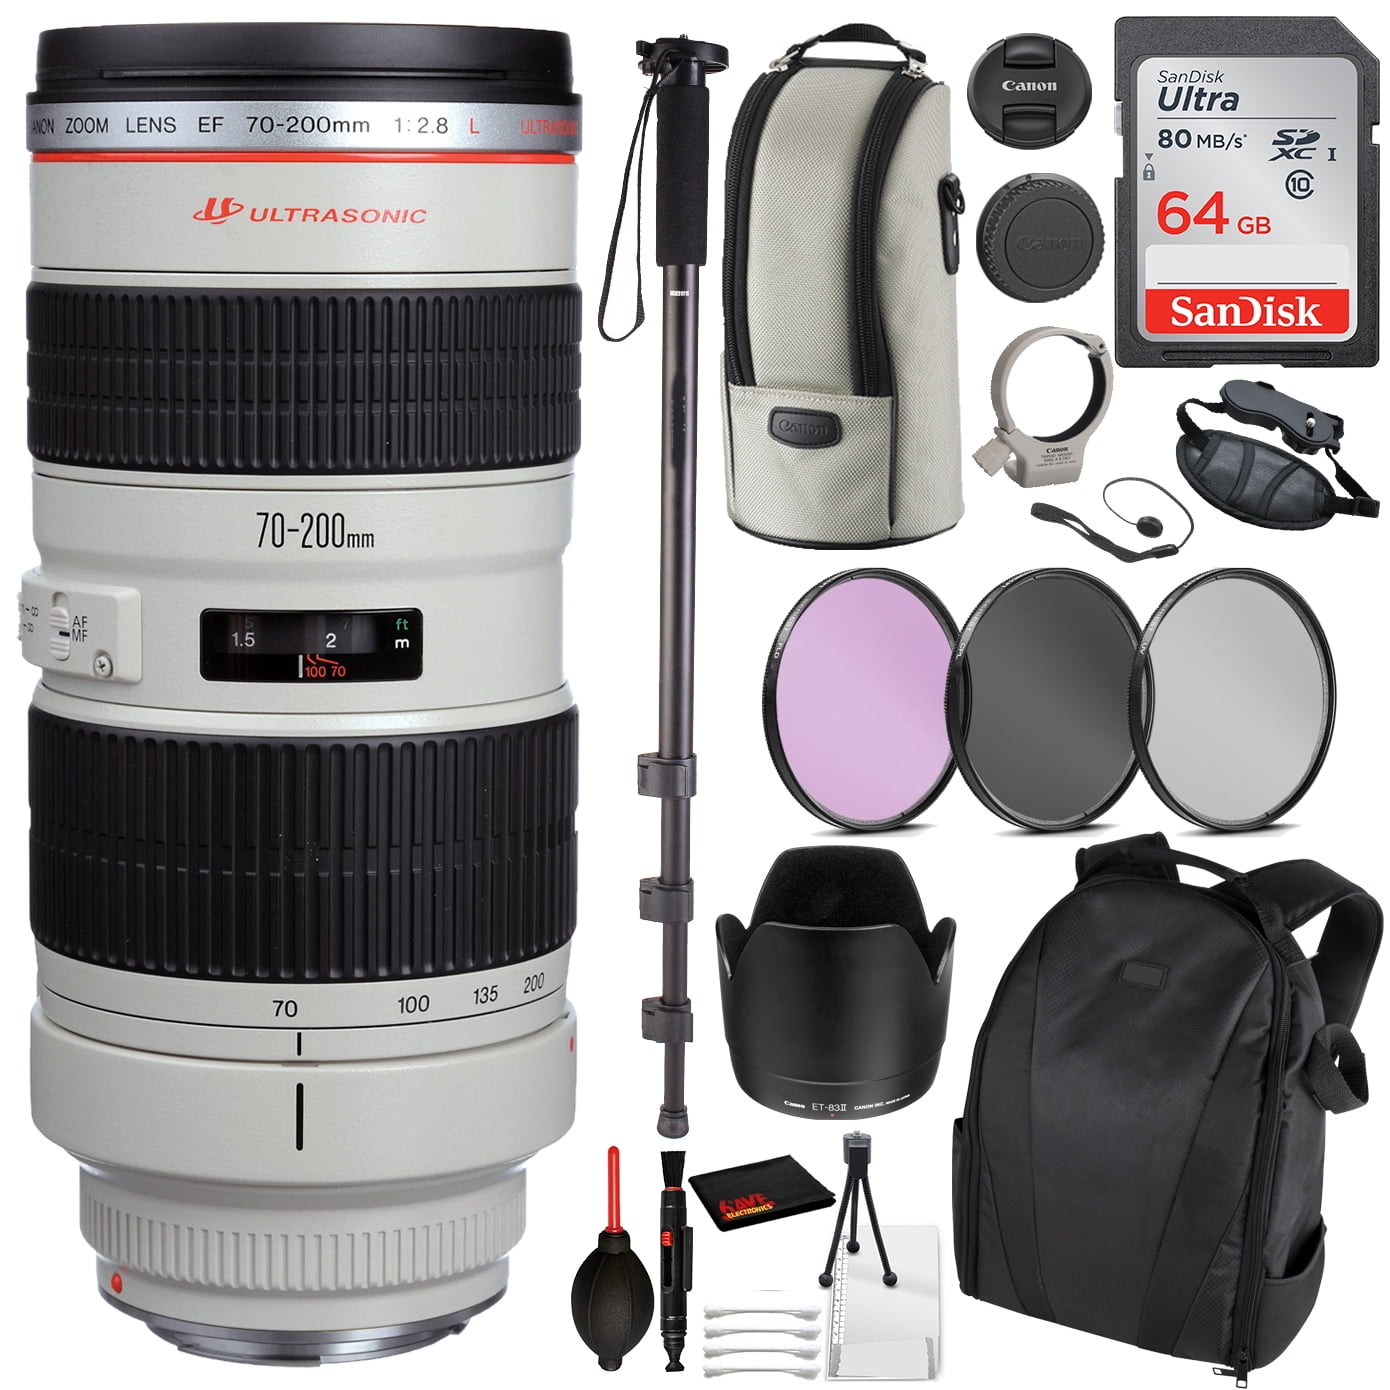 Canon EF 70-200mm f/2.8L USM Lens Essential Bundle Kit for Canon